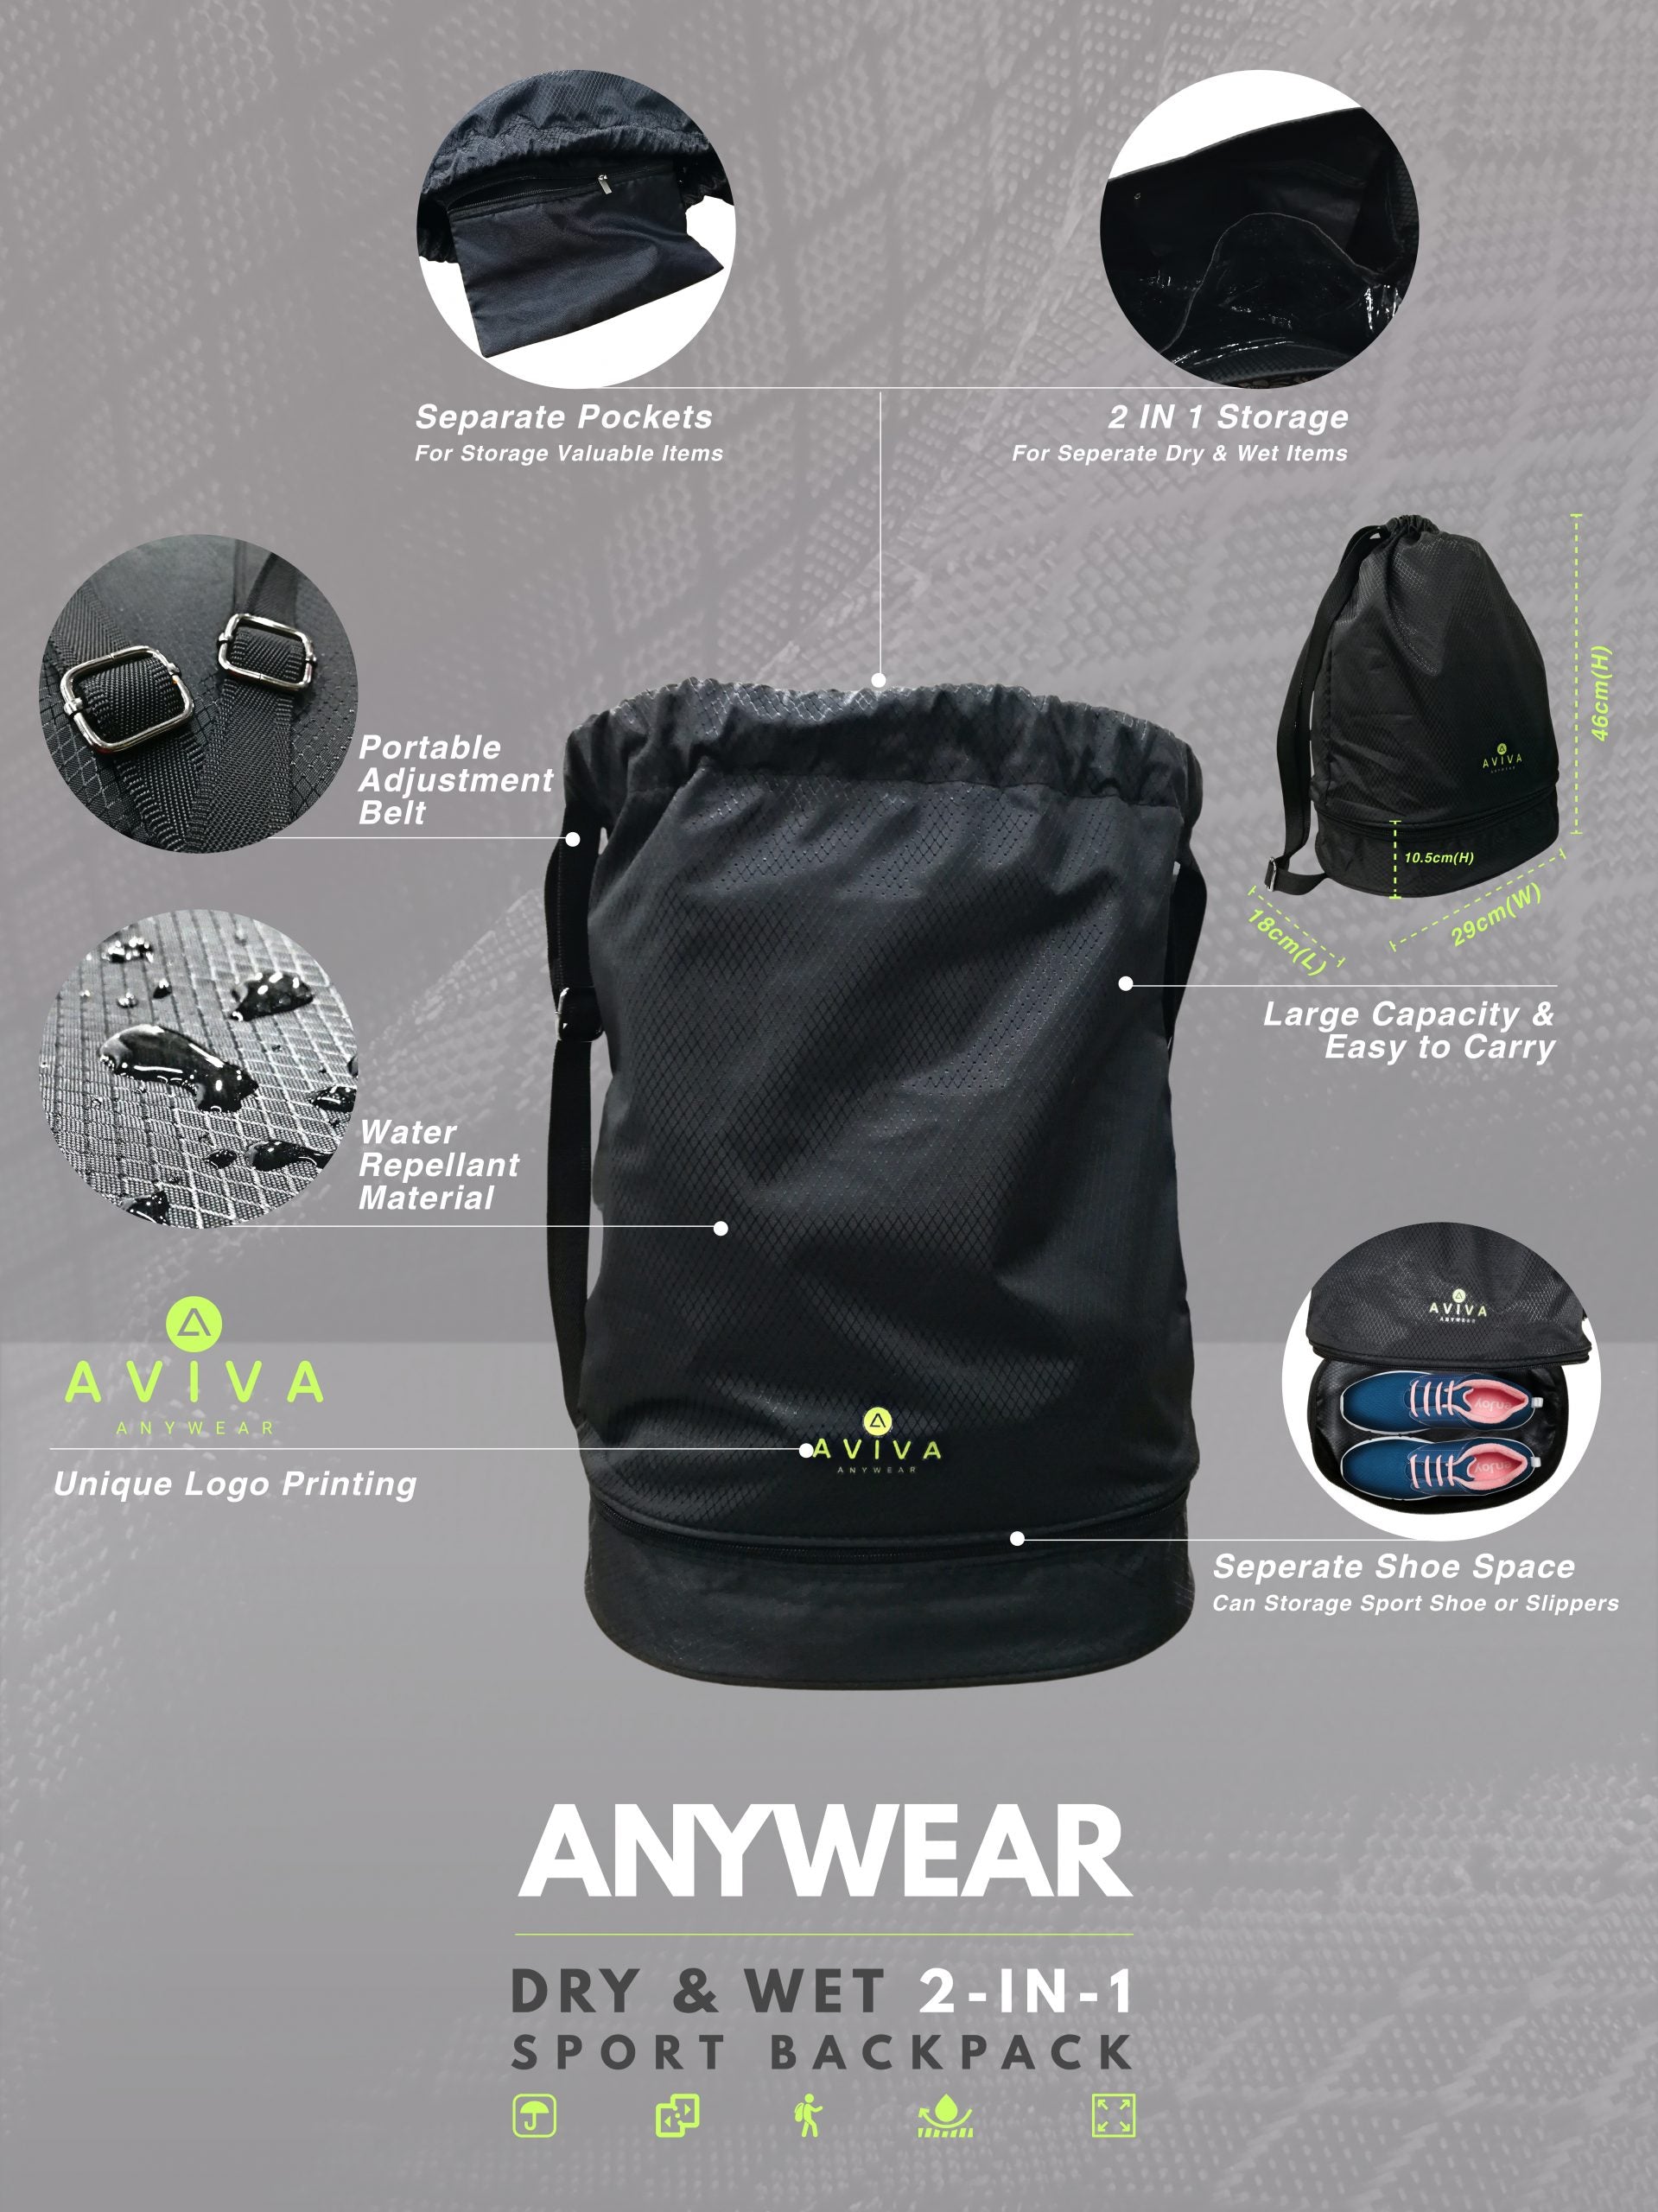 Anywear Dry & Wet 2-in-1 Sport Backpack